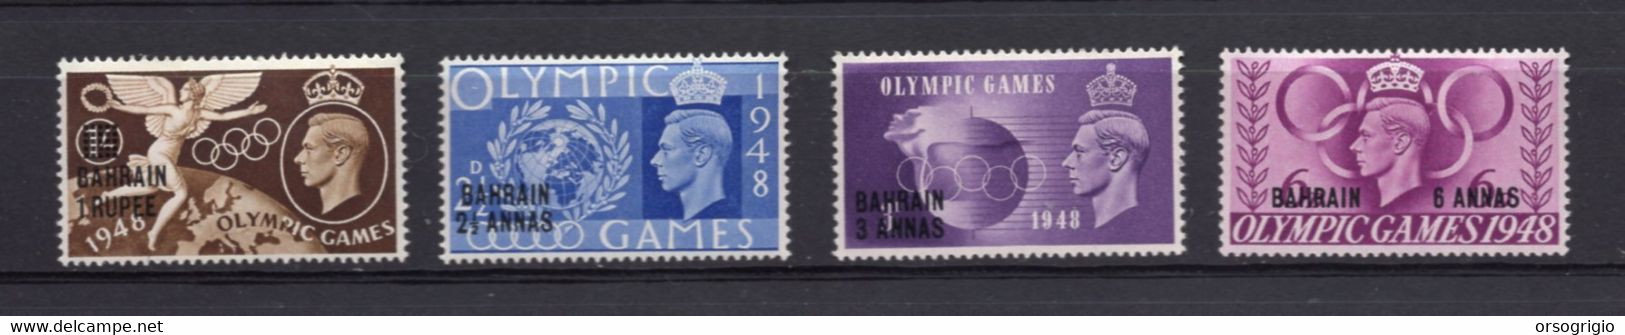 GRAN BRETAGNA - OLYMPIC GAMES - BAHRAIN - Estate 1948: Londra